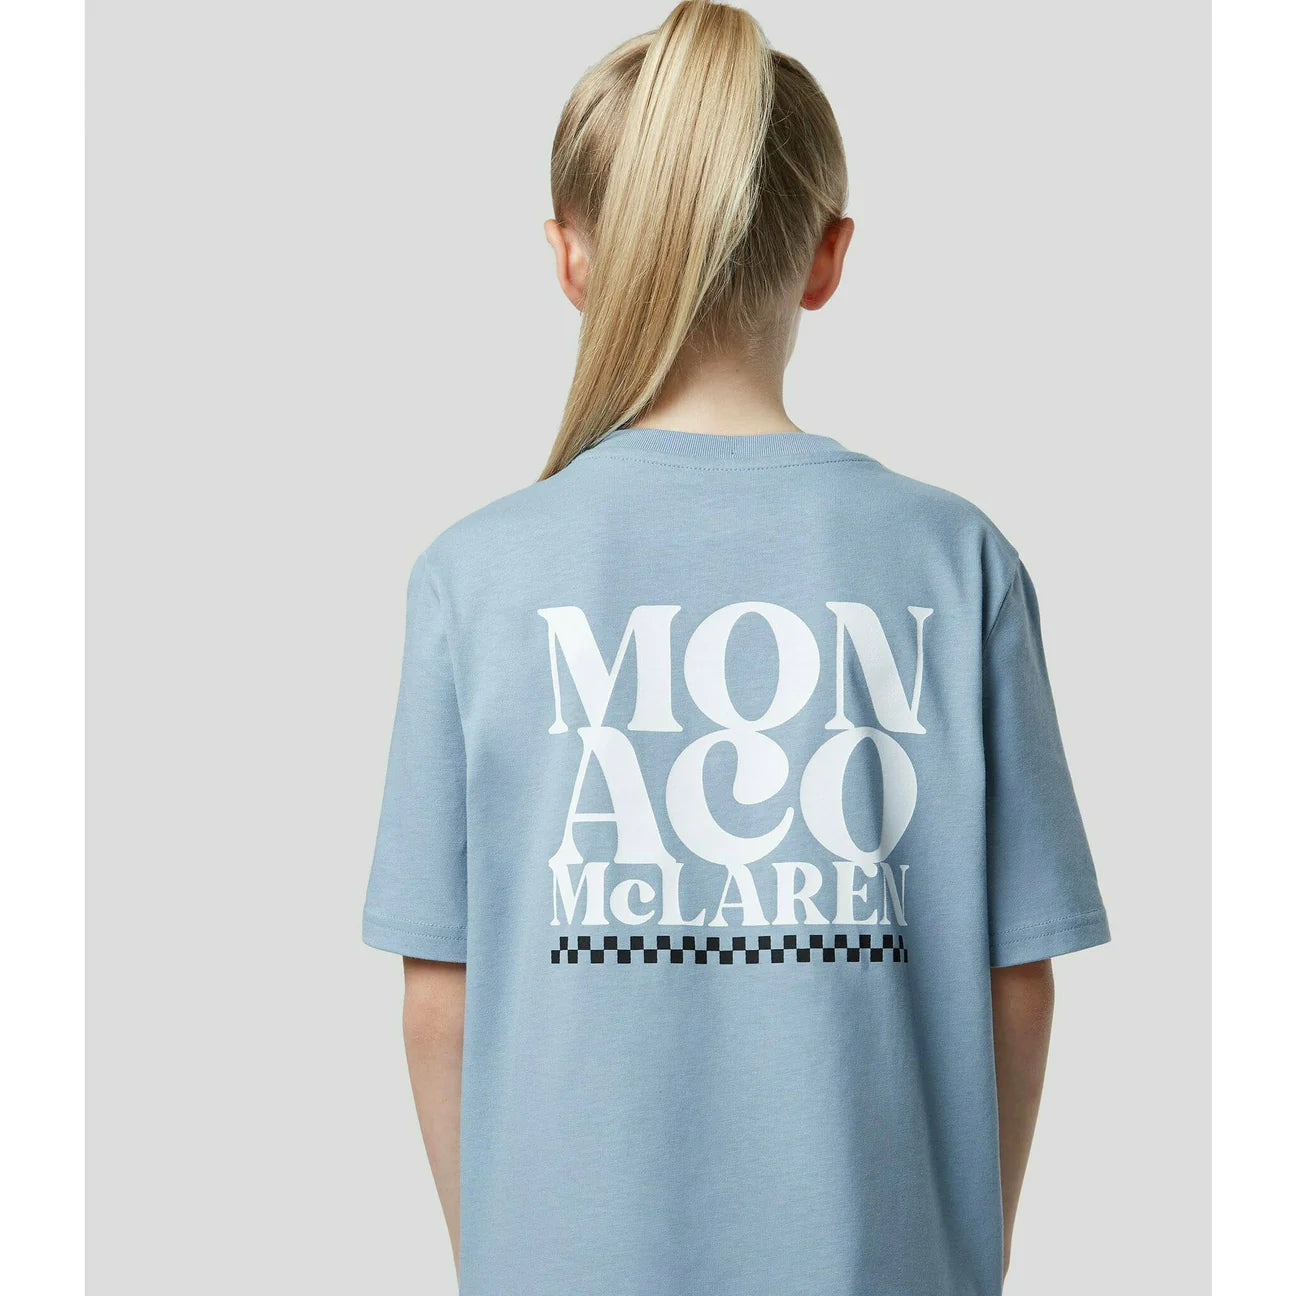 McLaren F1 Special Edition Monaco GP Kids Slogan T-Shirt - Youth Blue/Orange